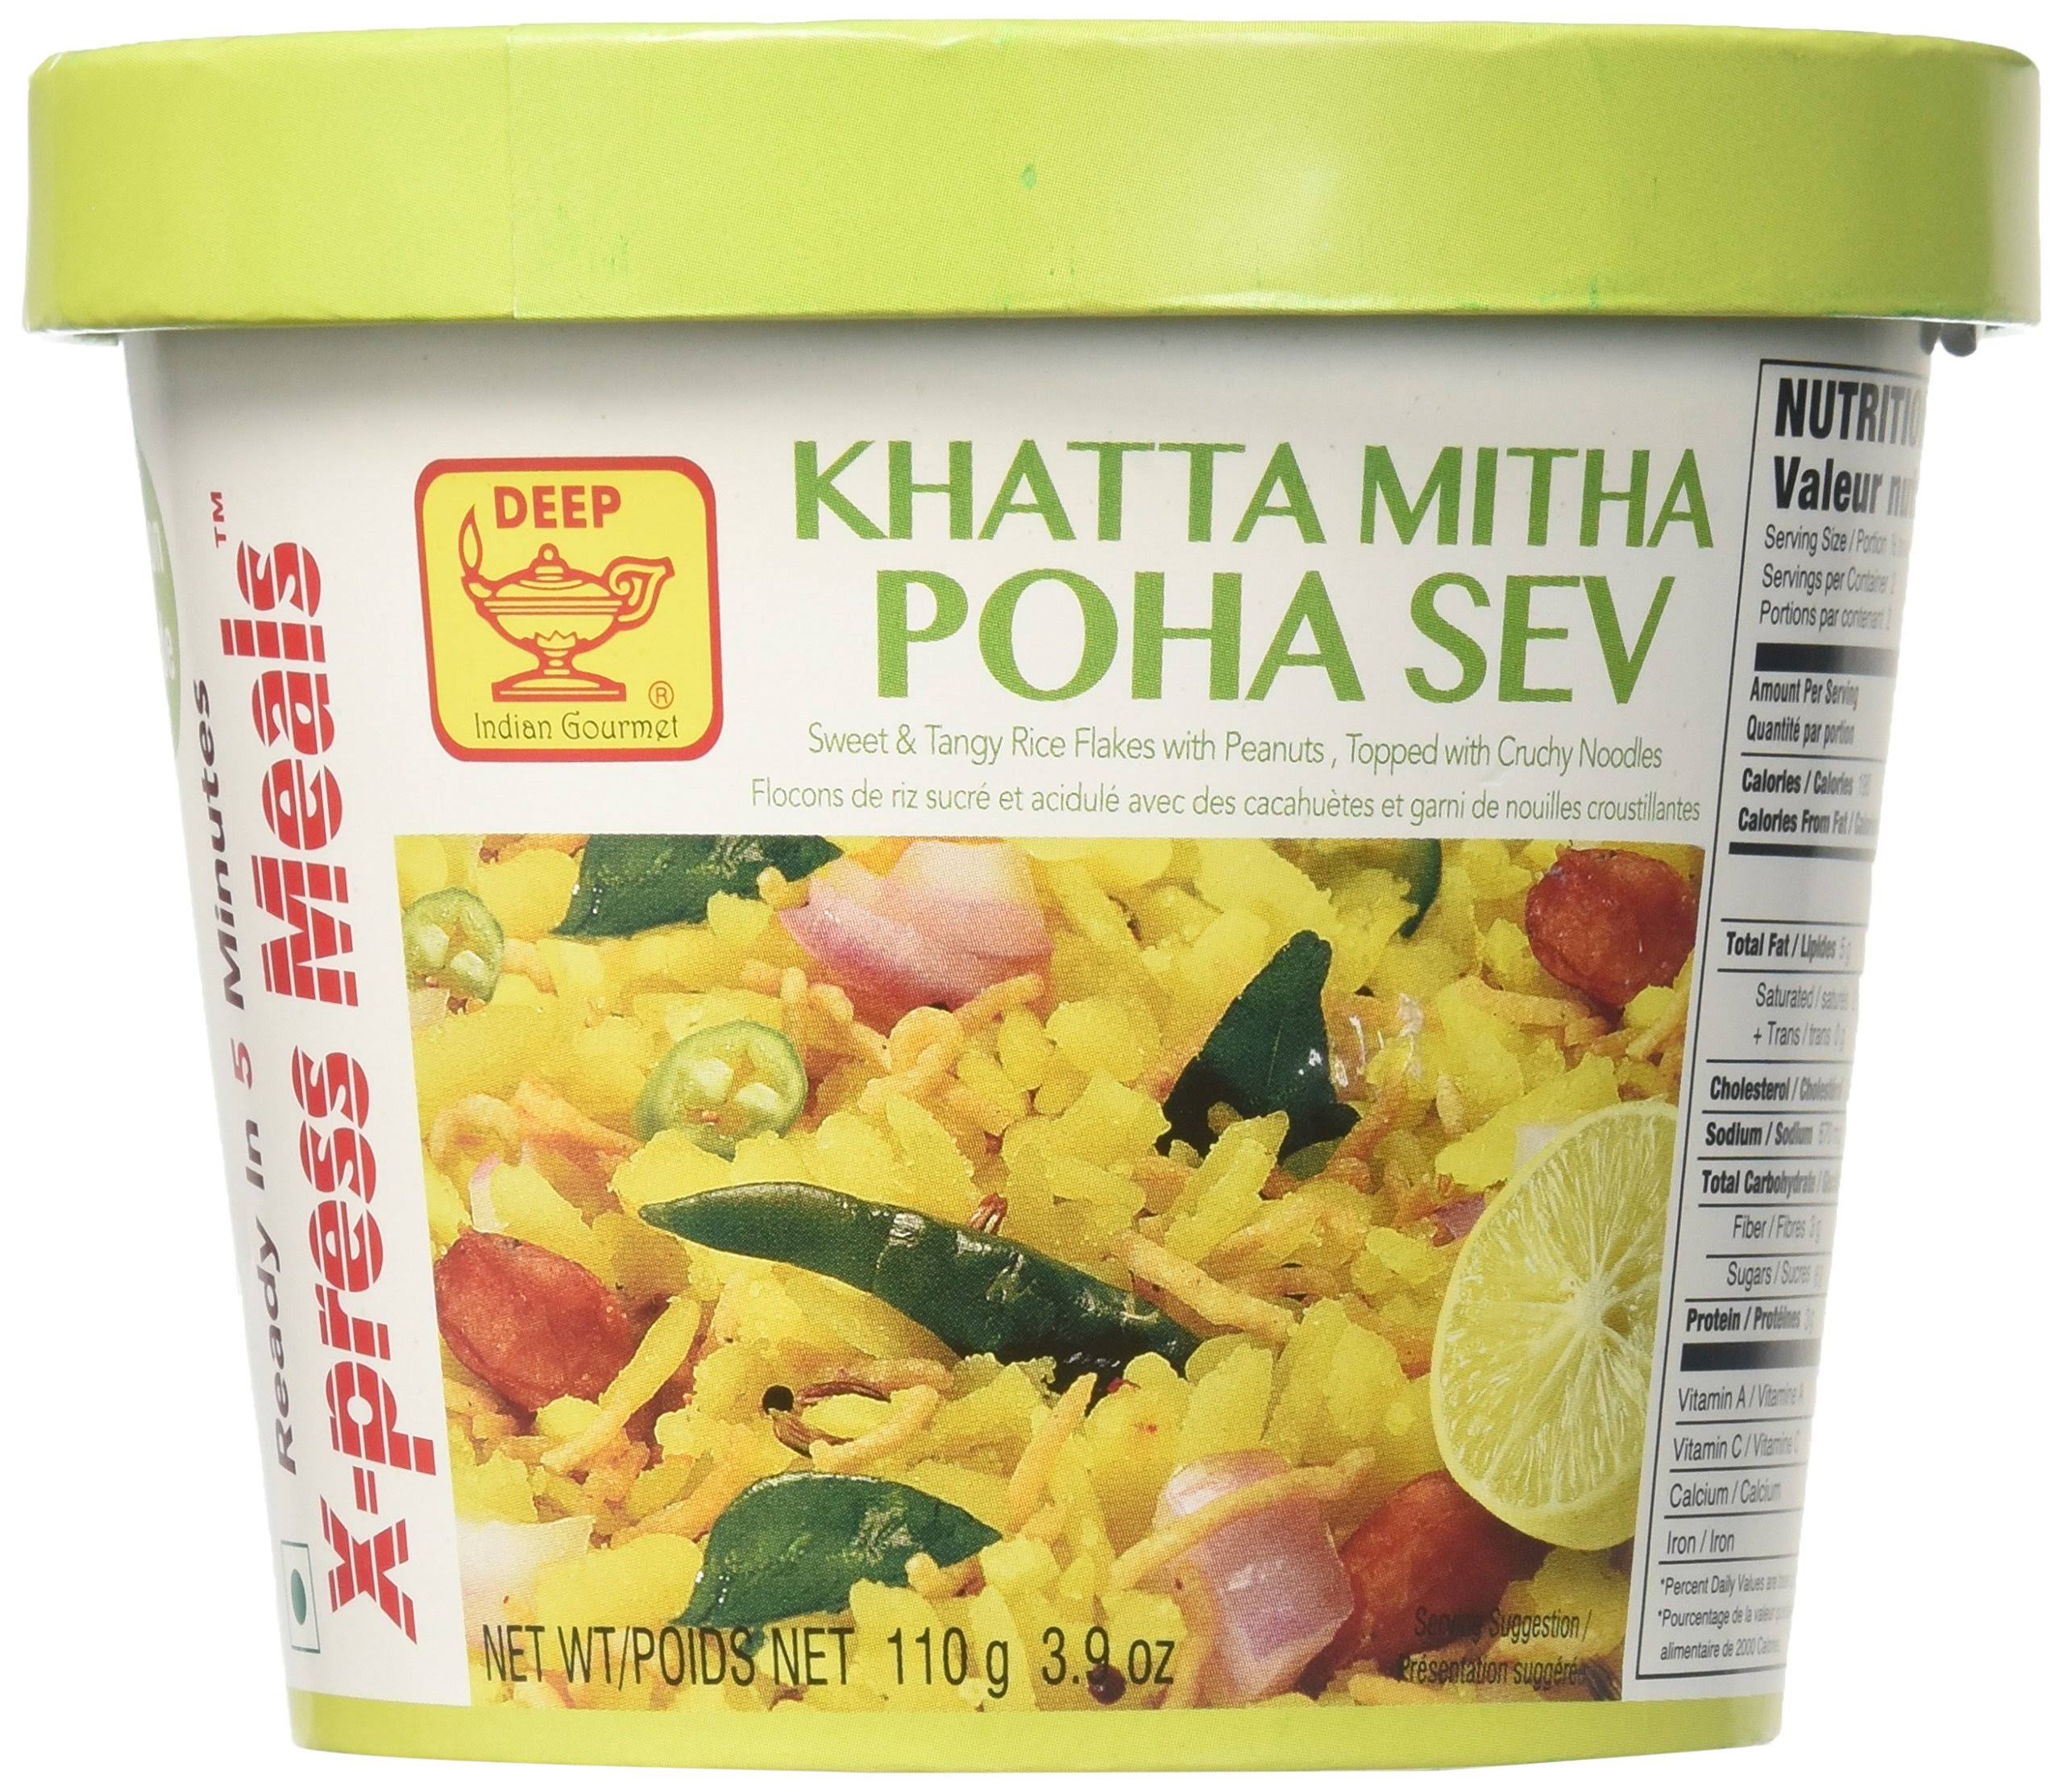 Deep X-Press Meals - Khatta Mitha Poha Sev